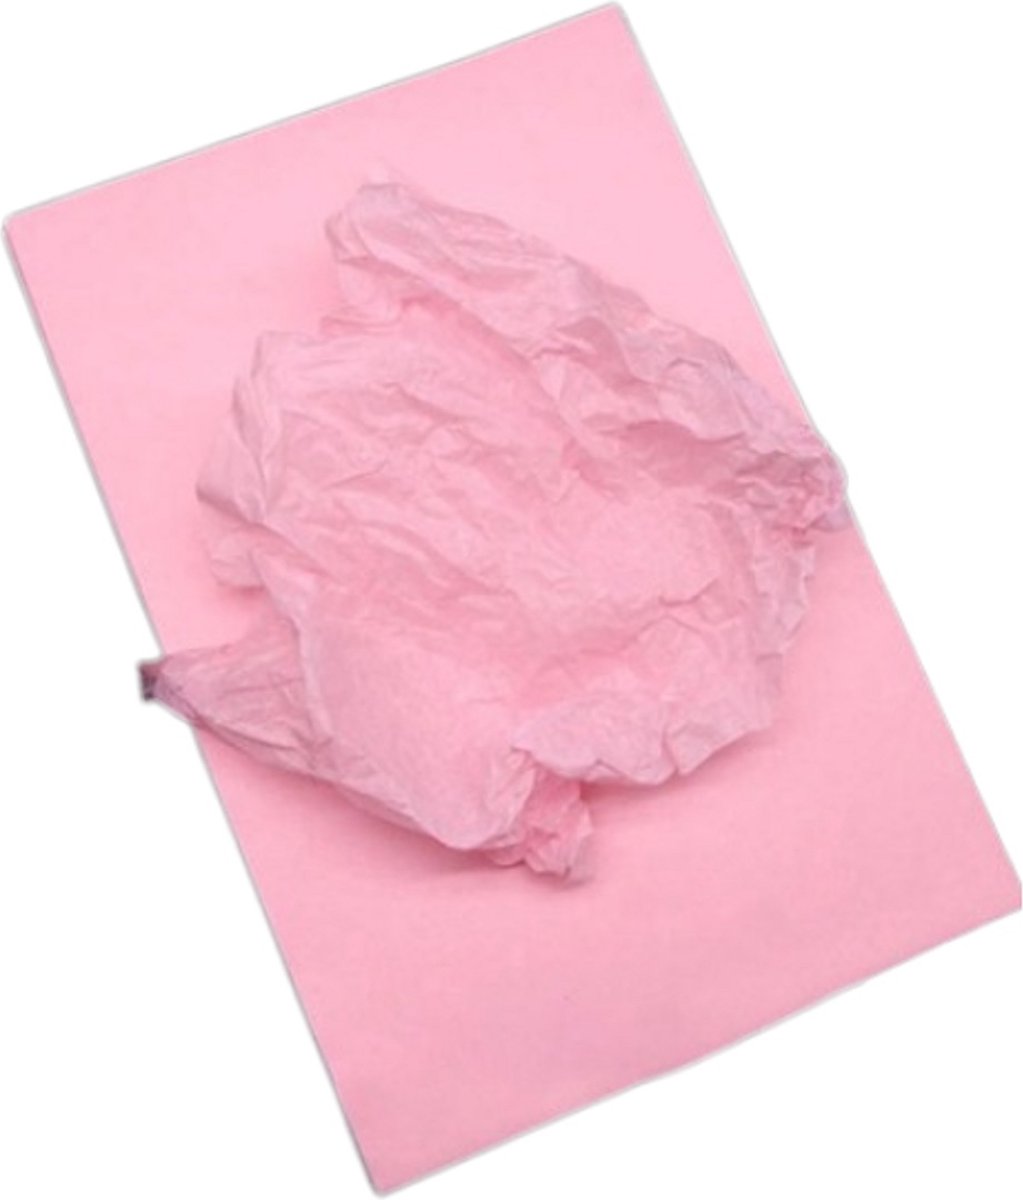 100 stuks A4 Zijdepapier Licht roze 210 300mm Vloeipapier tissue papier roze inpakpapier knutselen knutsel papier vloei papier inpak inpakken dun papier voor kleding vul materiaal fel roze silk paper - Merkloos